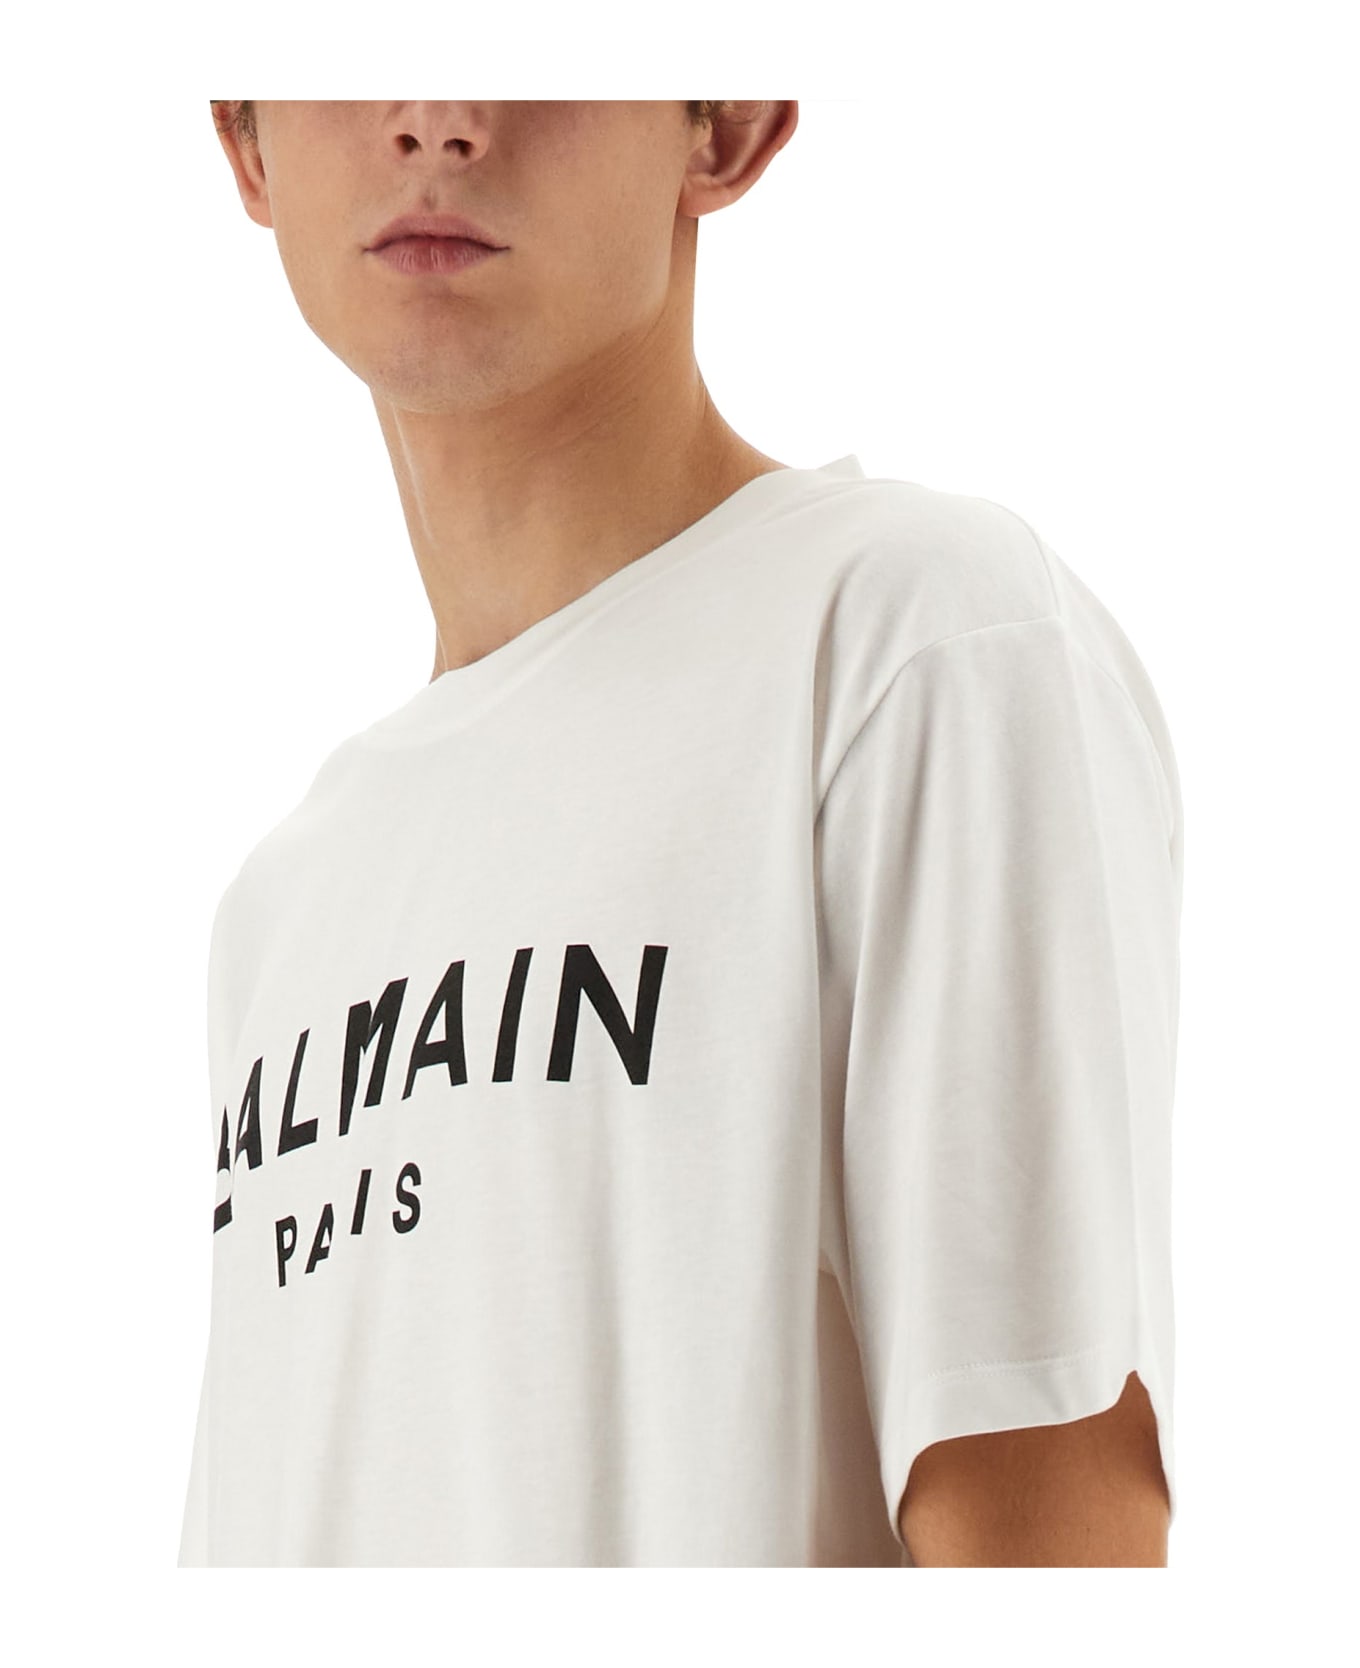 Balmain Logo Print T-shirt - BIANCO NERO